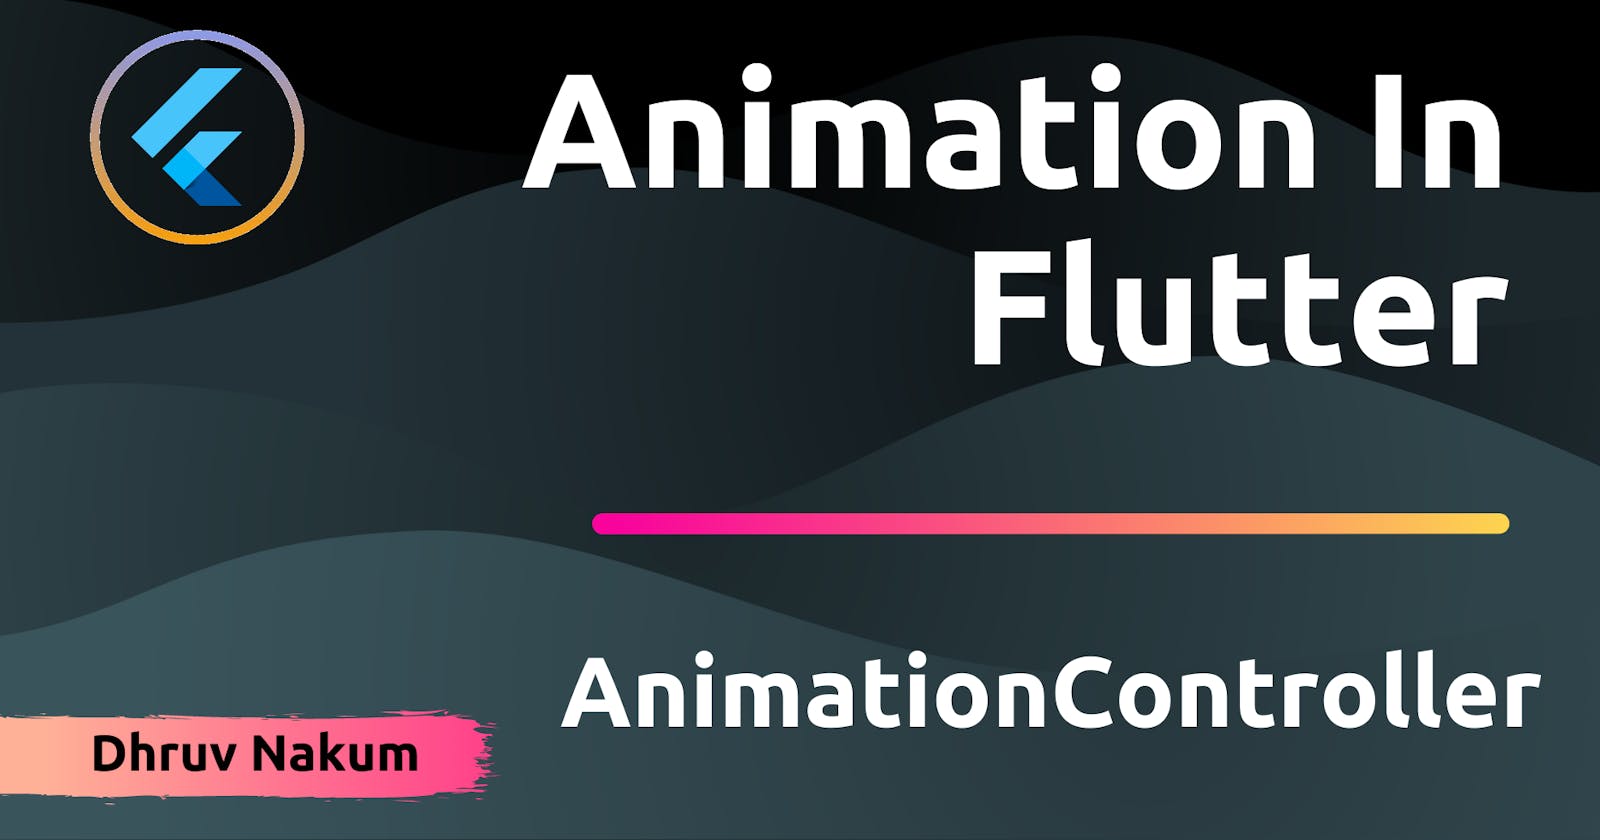 Animation In Flutter: AnimationController